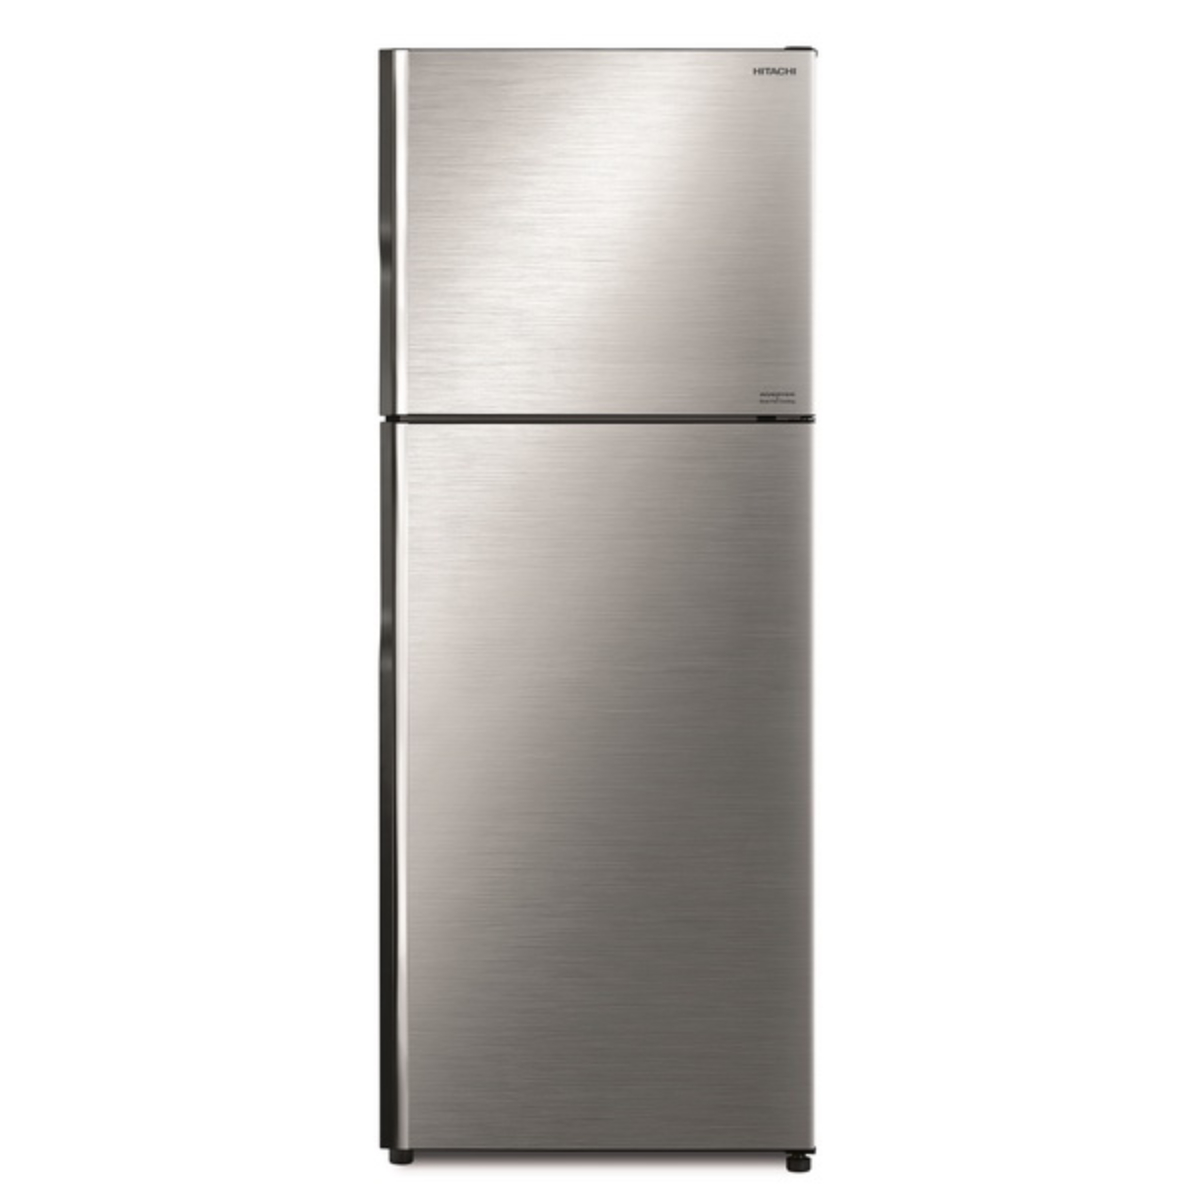 Hitachi Double Doors Refrigerator (15 Cubic, Brilliant Silver) R-VX400PF BSL